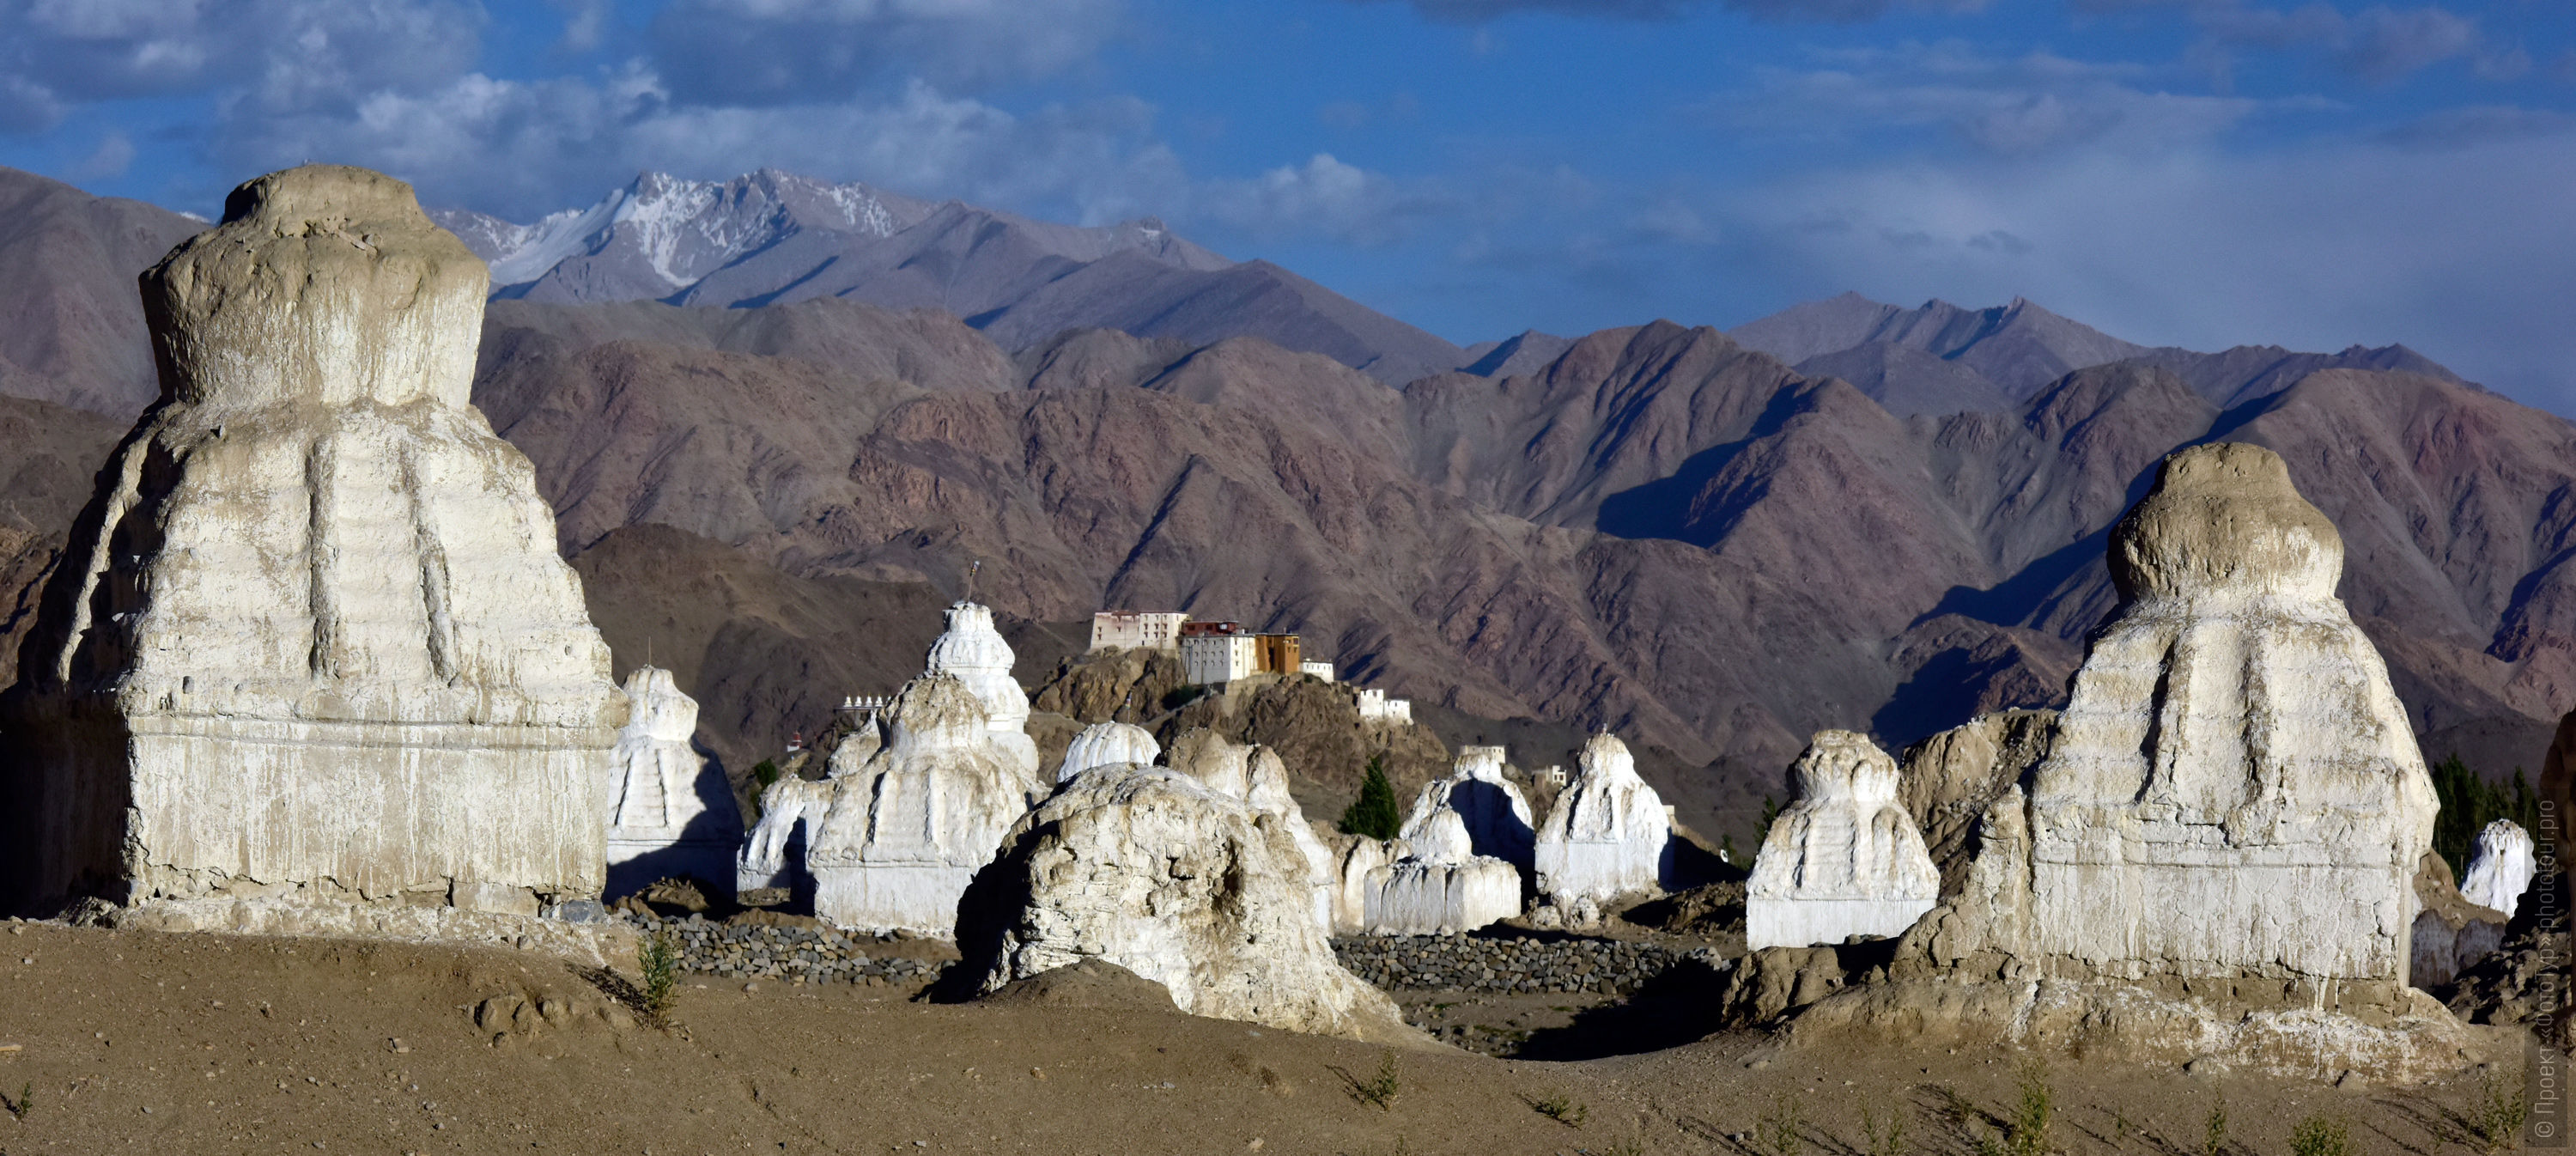 White stupas of the monastery of Shey Gonpa. Tour Origins of Tibet: Bon, true Aryans to Da Khan, Mystery Dance Tsam in Lamayuru, Lake Pangong, June 15 - 26, 2020. Tour to Ladakh.